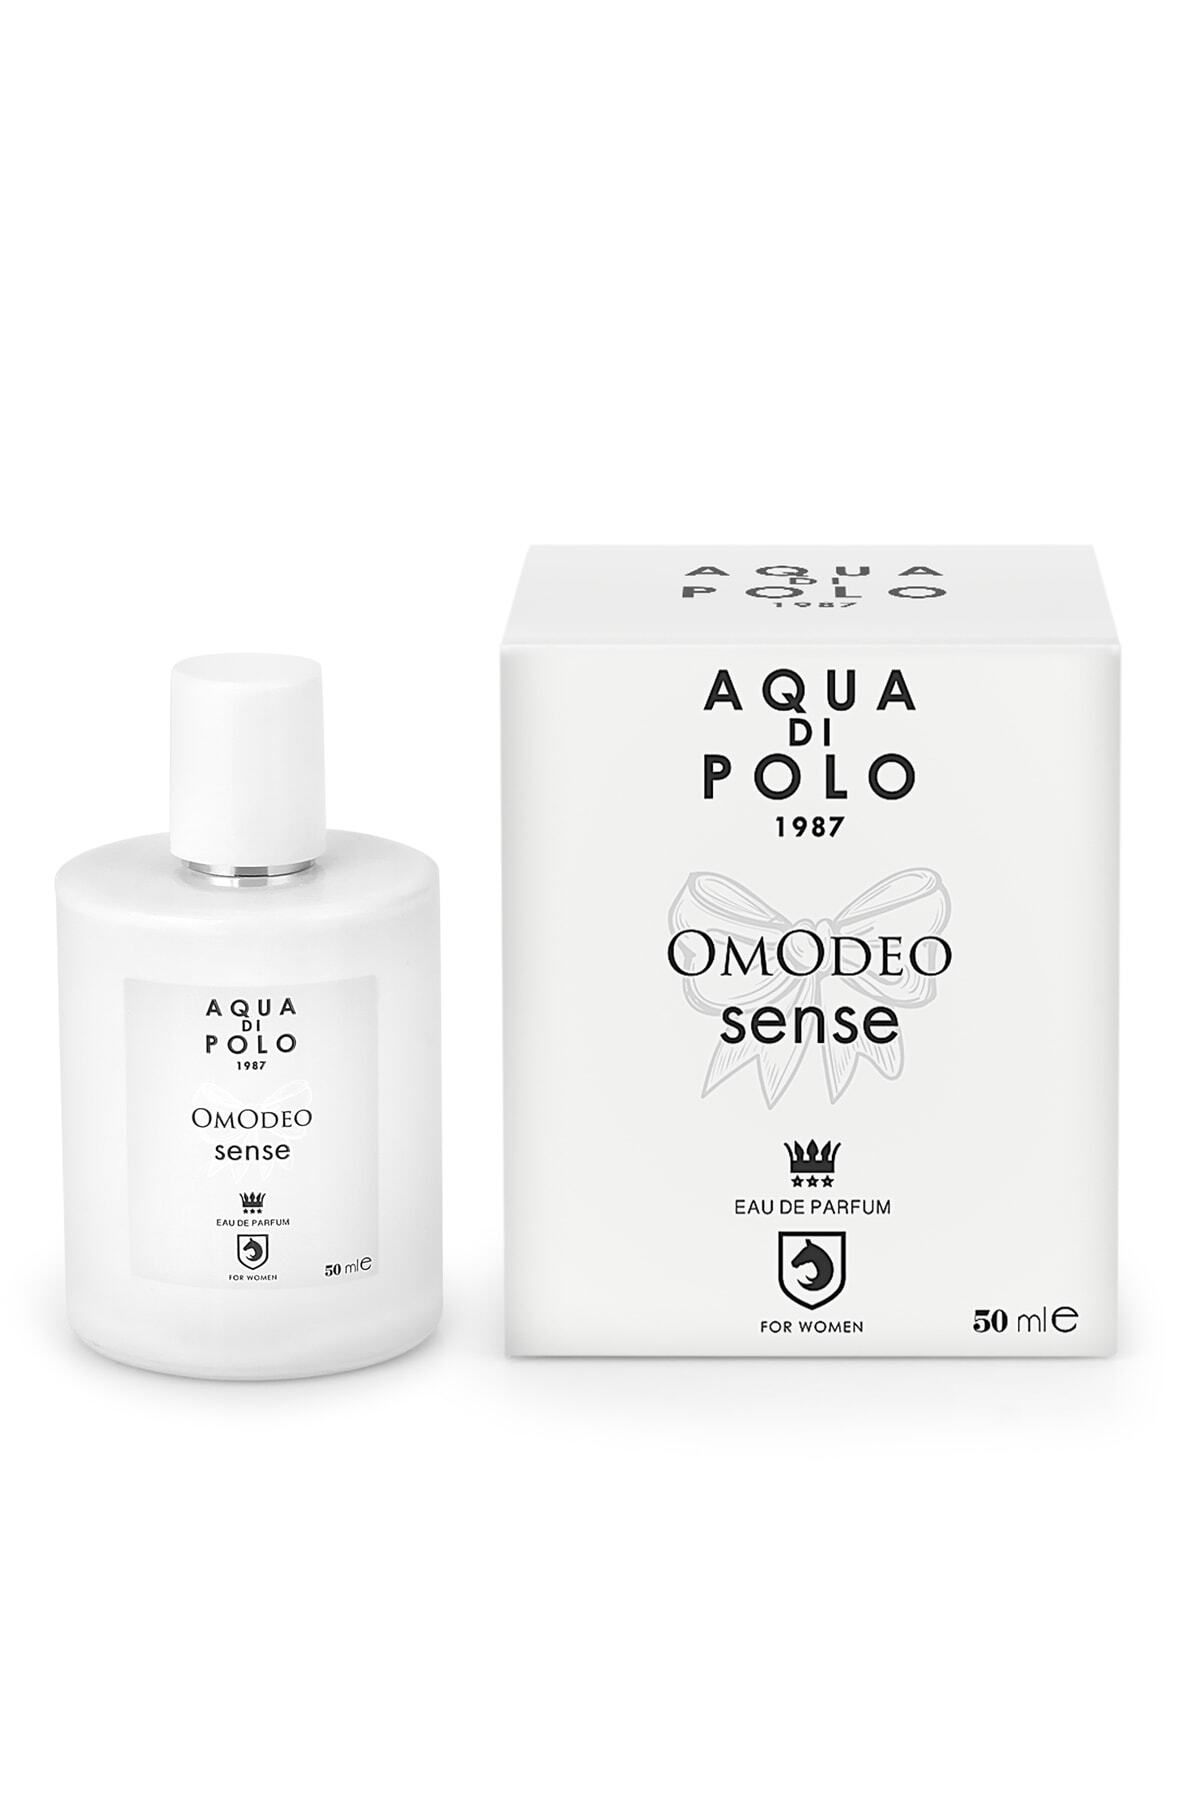 Aqua Di Polo 1987 Omodeo Sense 50 Ml Kadın Edp Apcn001102